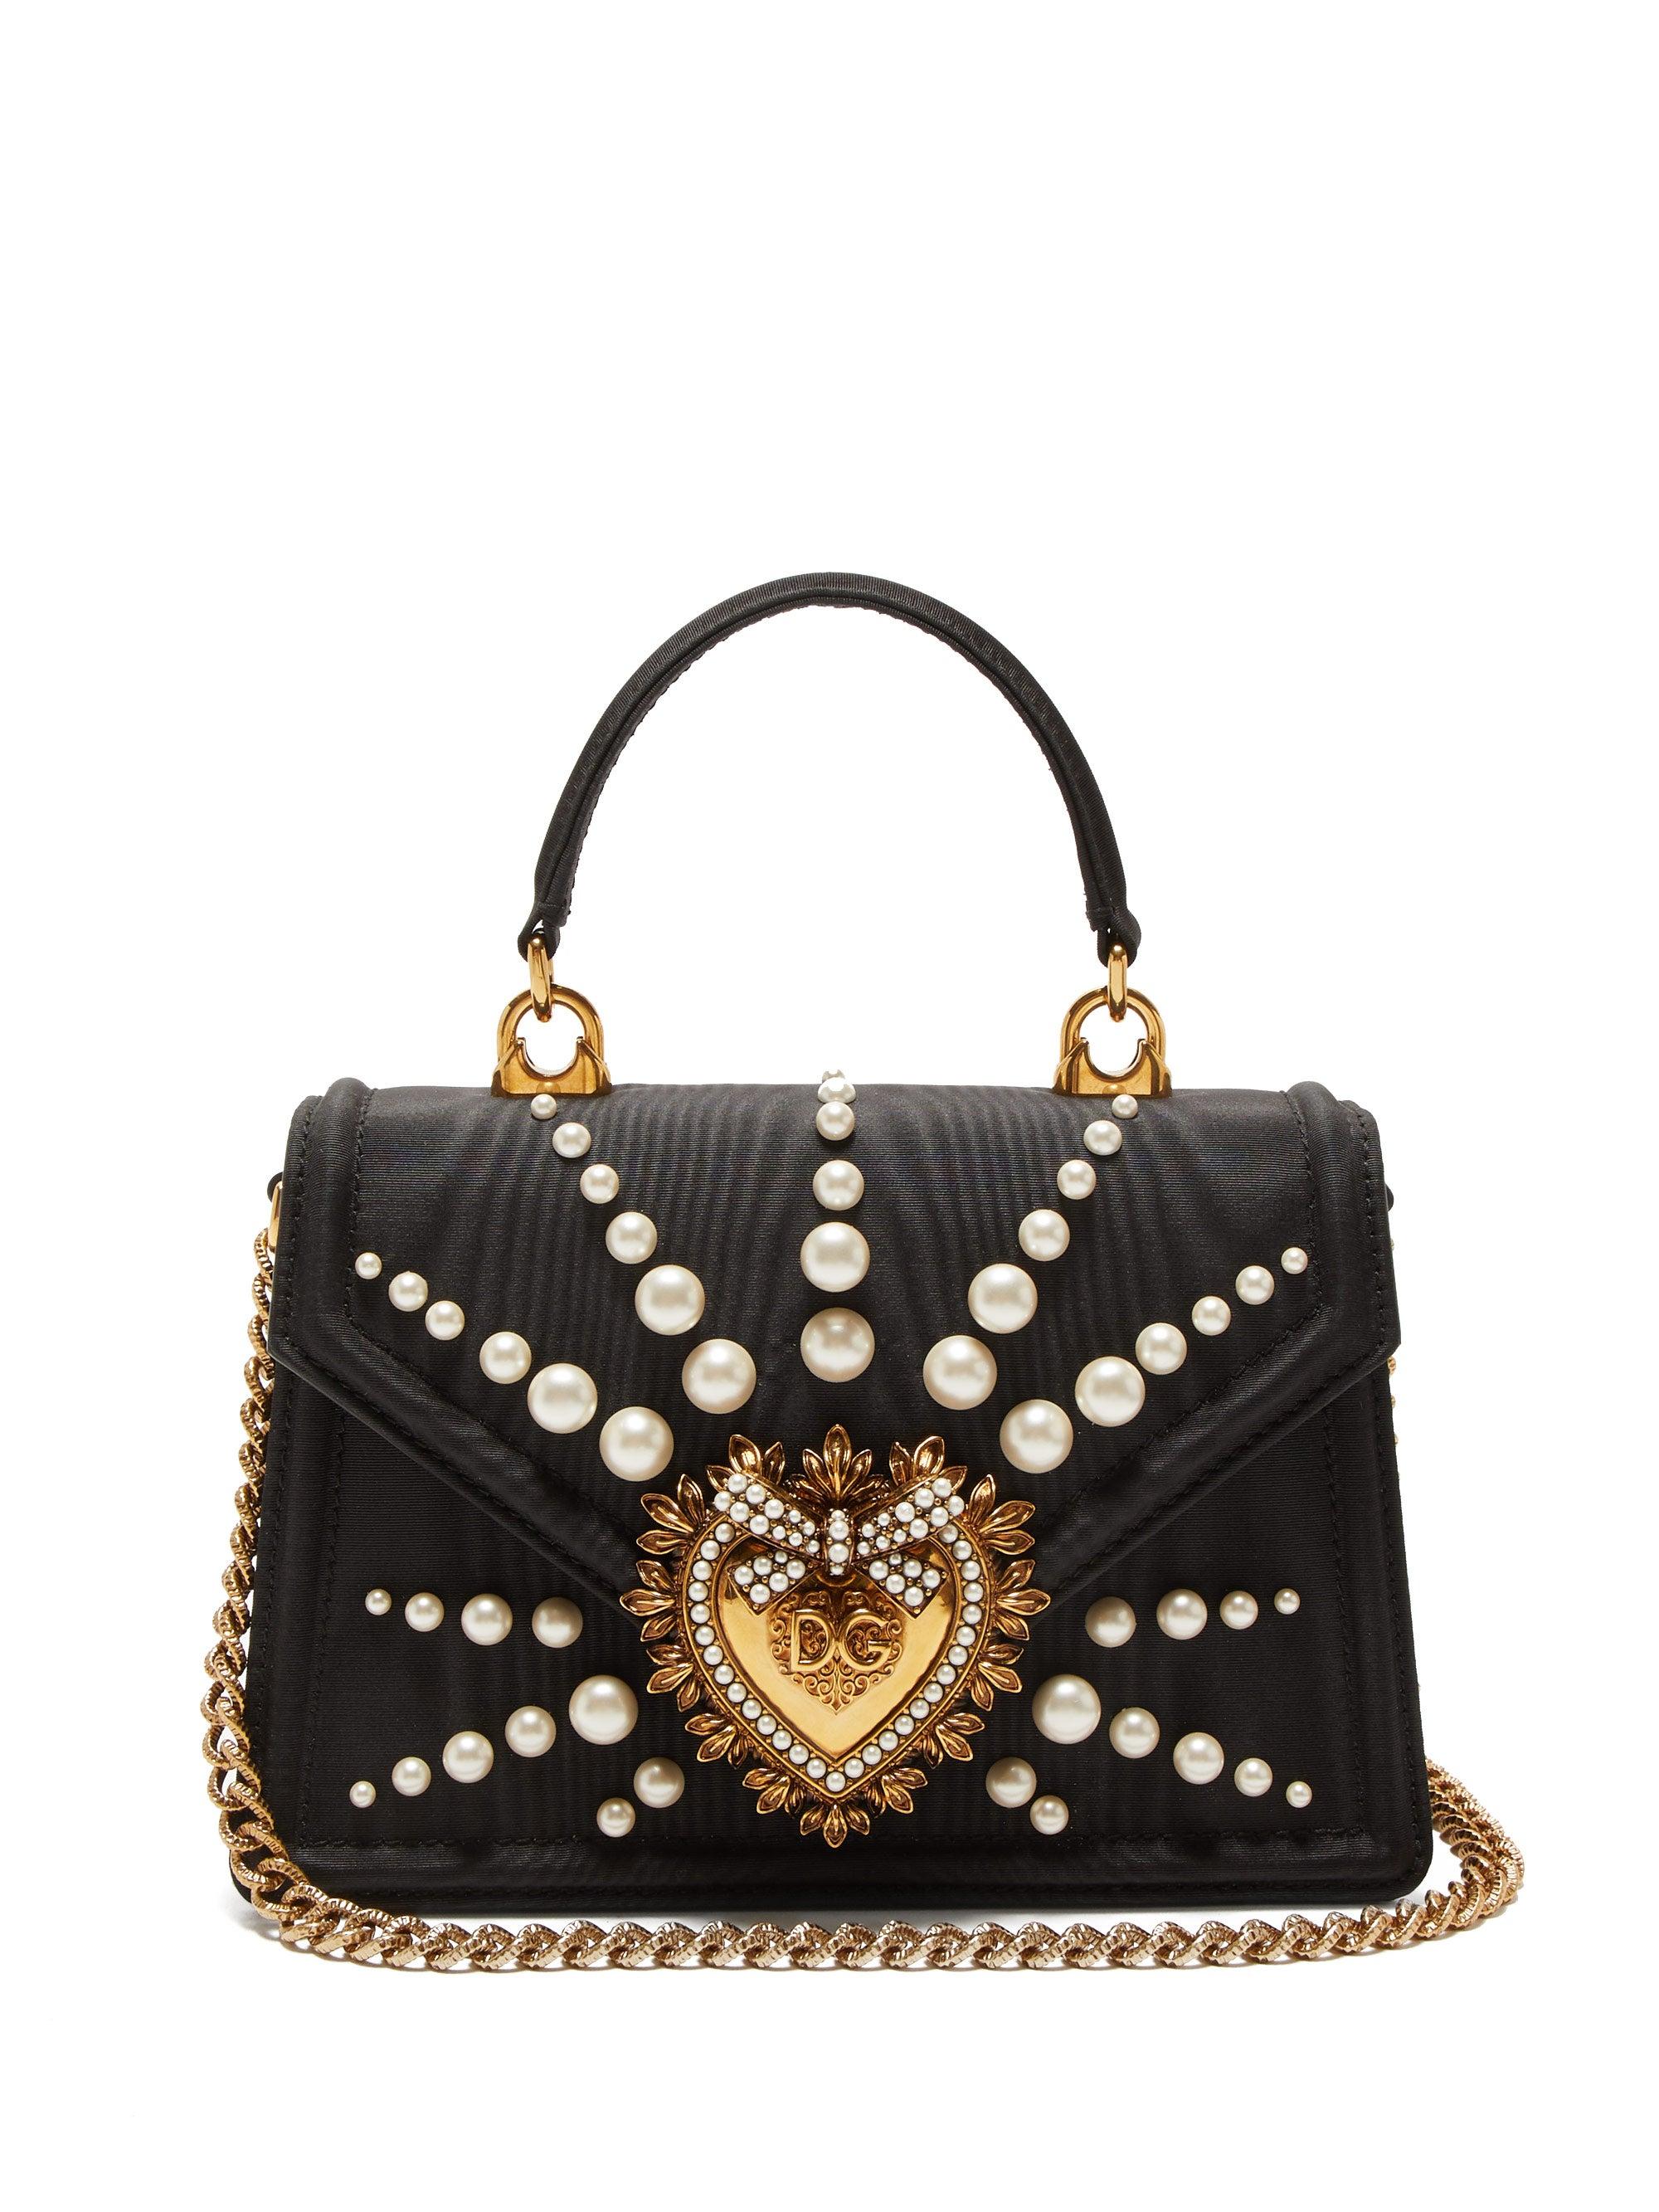 Dolce & Gabbana Devotion Faux Pearl-embellished Moire Bag in Black | Lyst